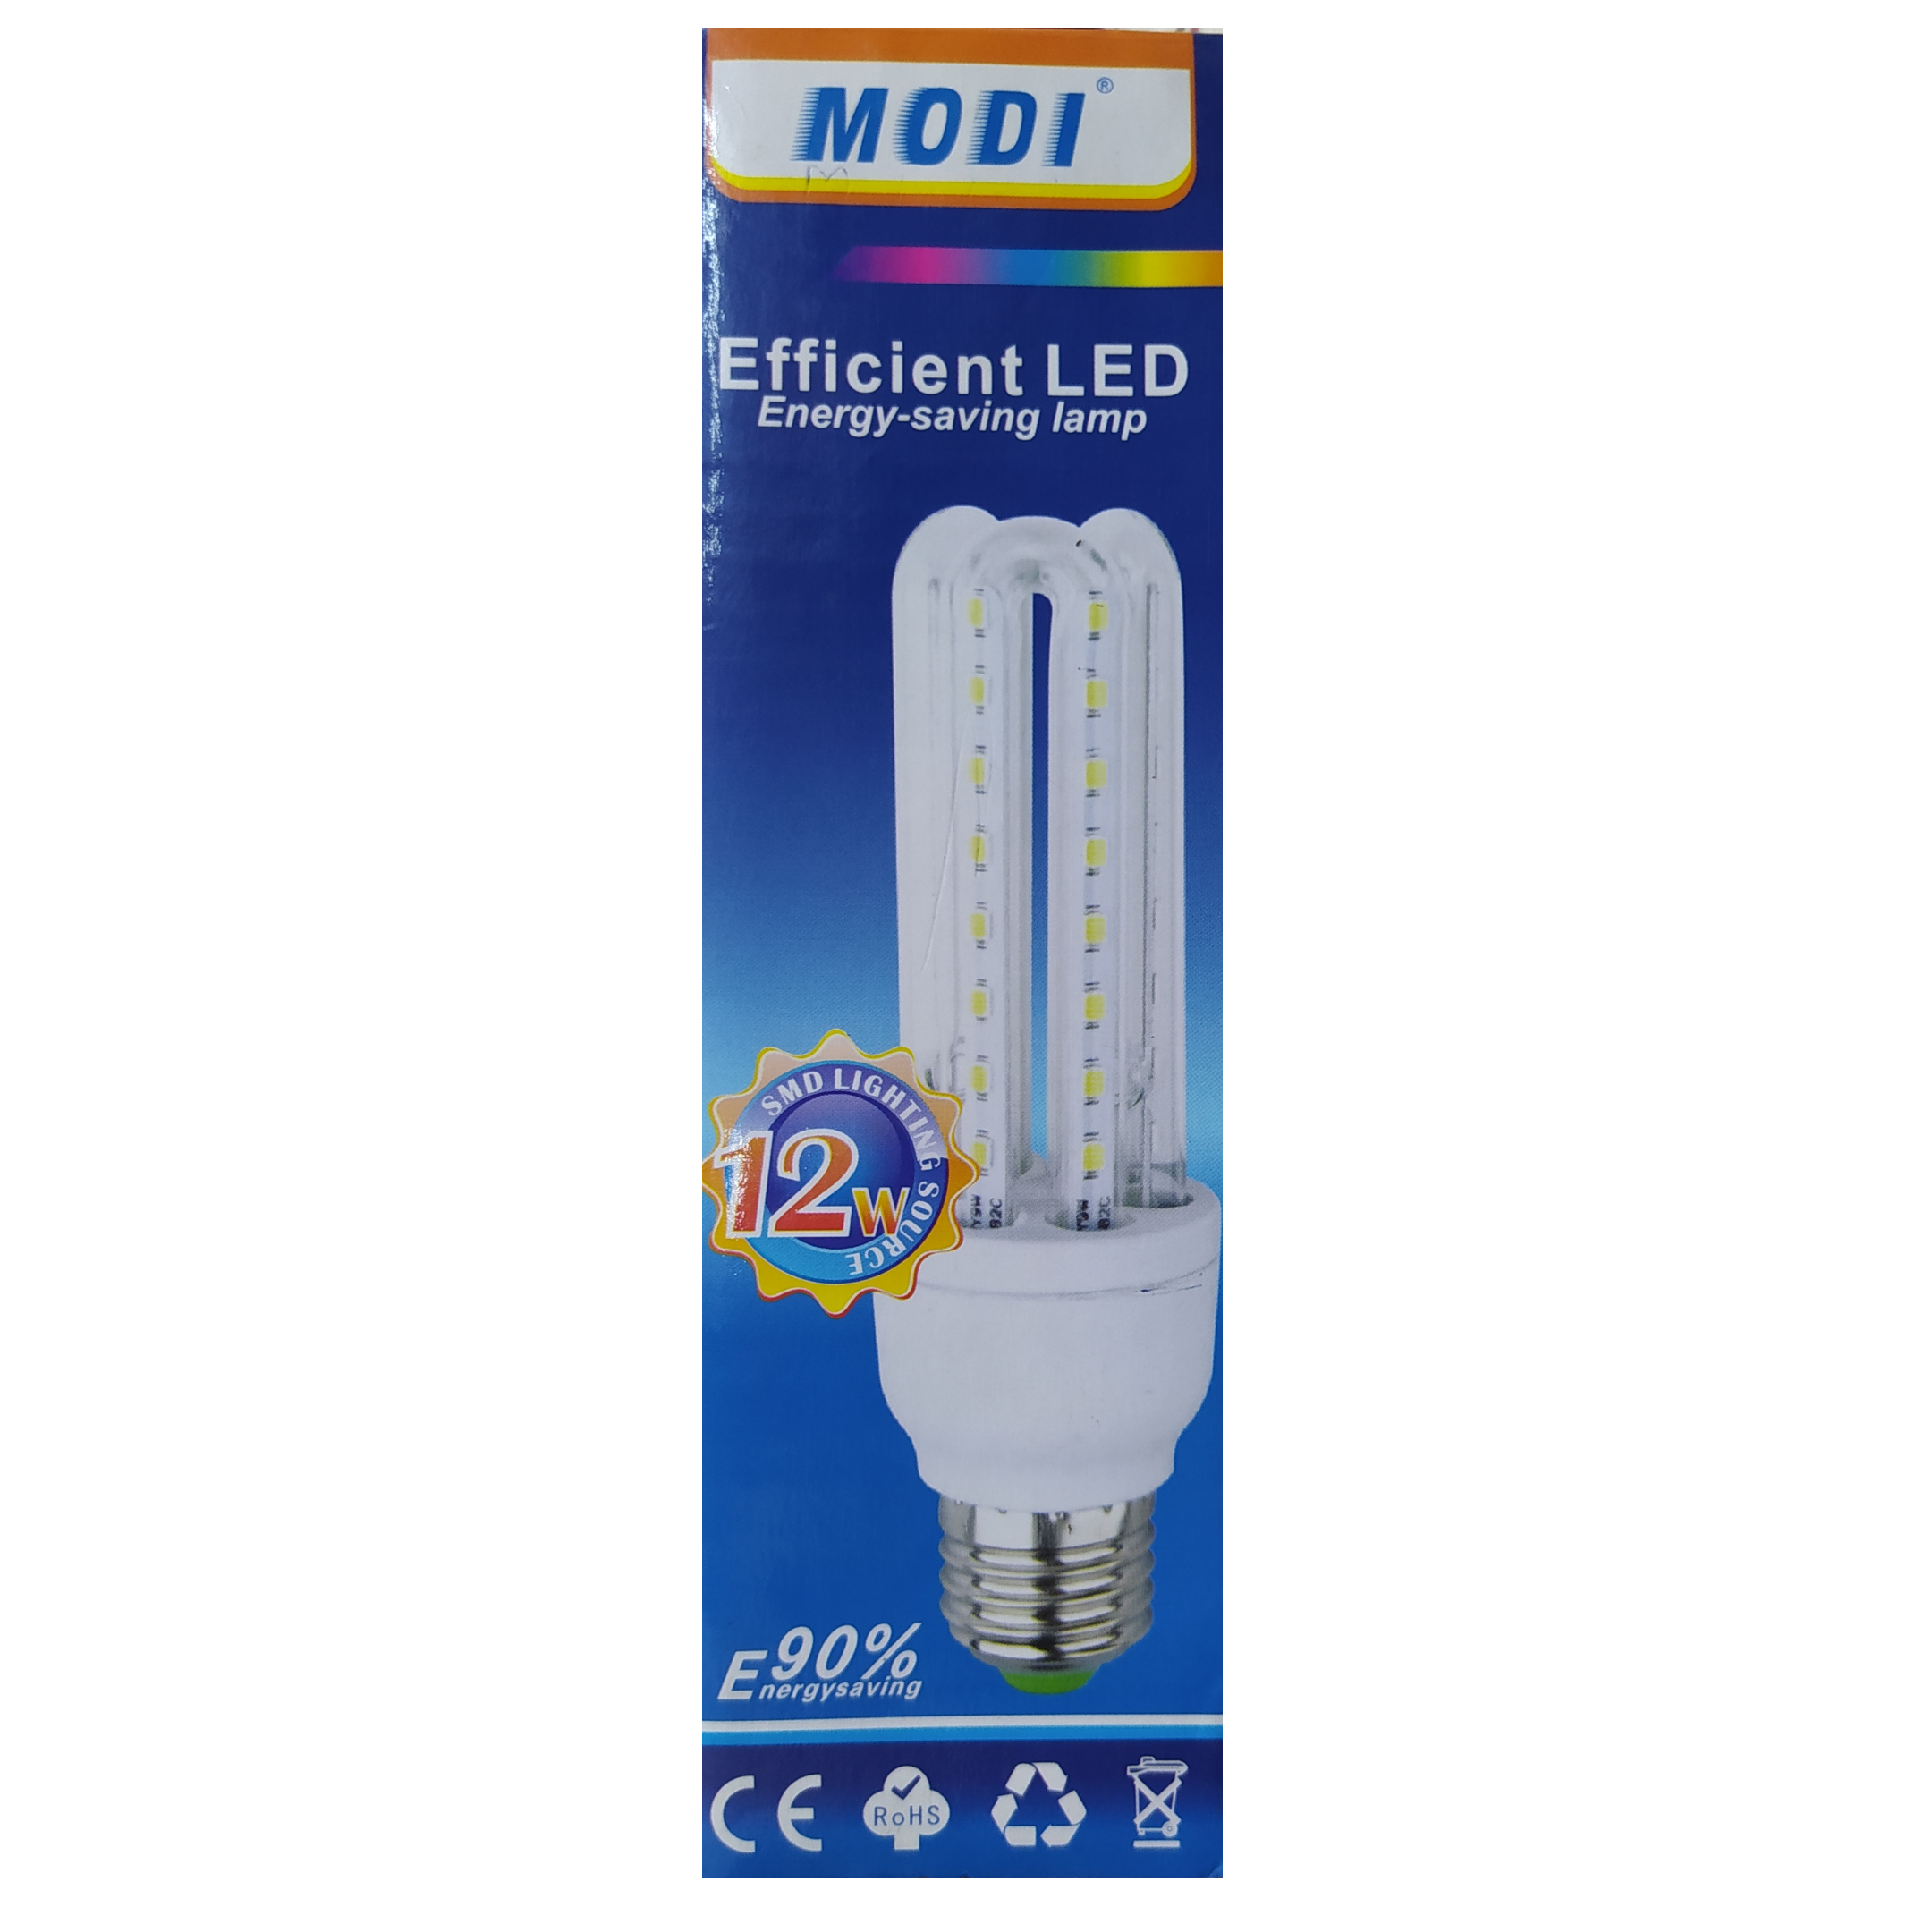 Modi 12W Efficient LED Light